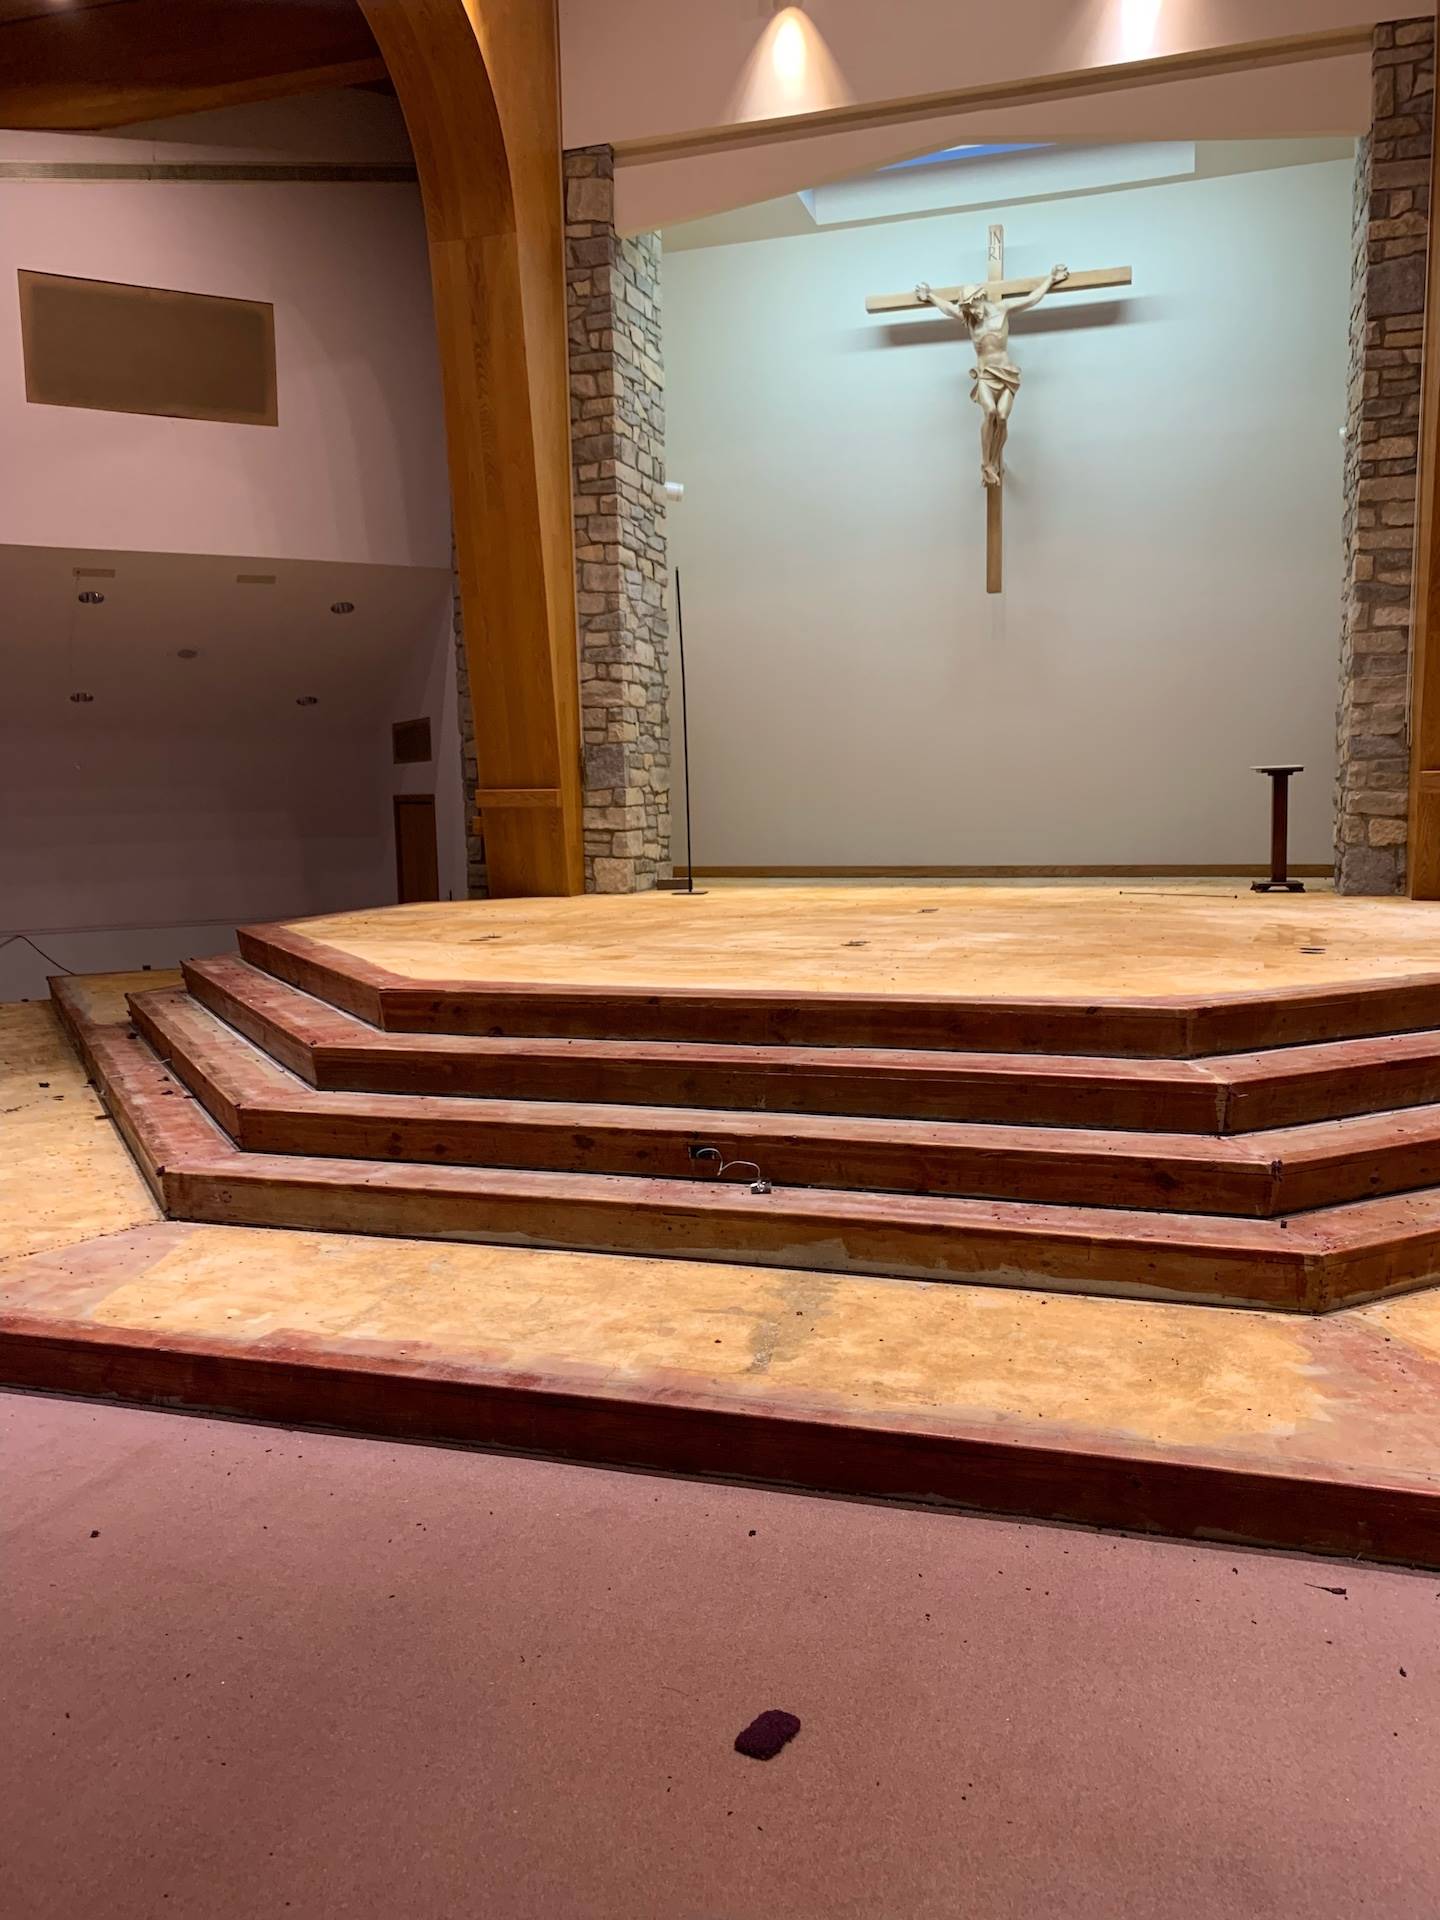 church remodel progress